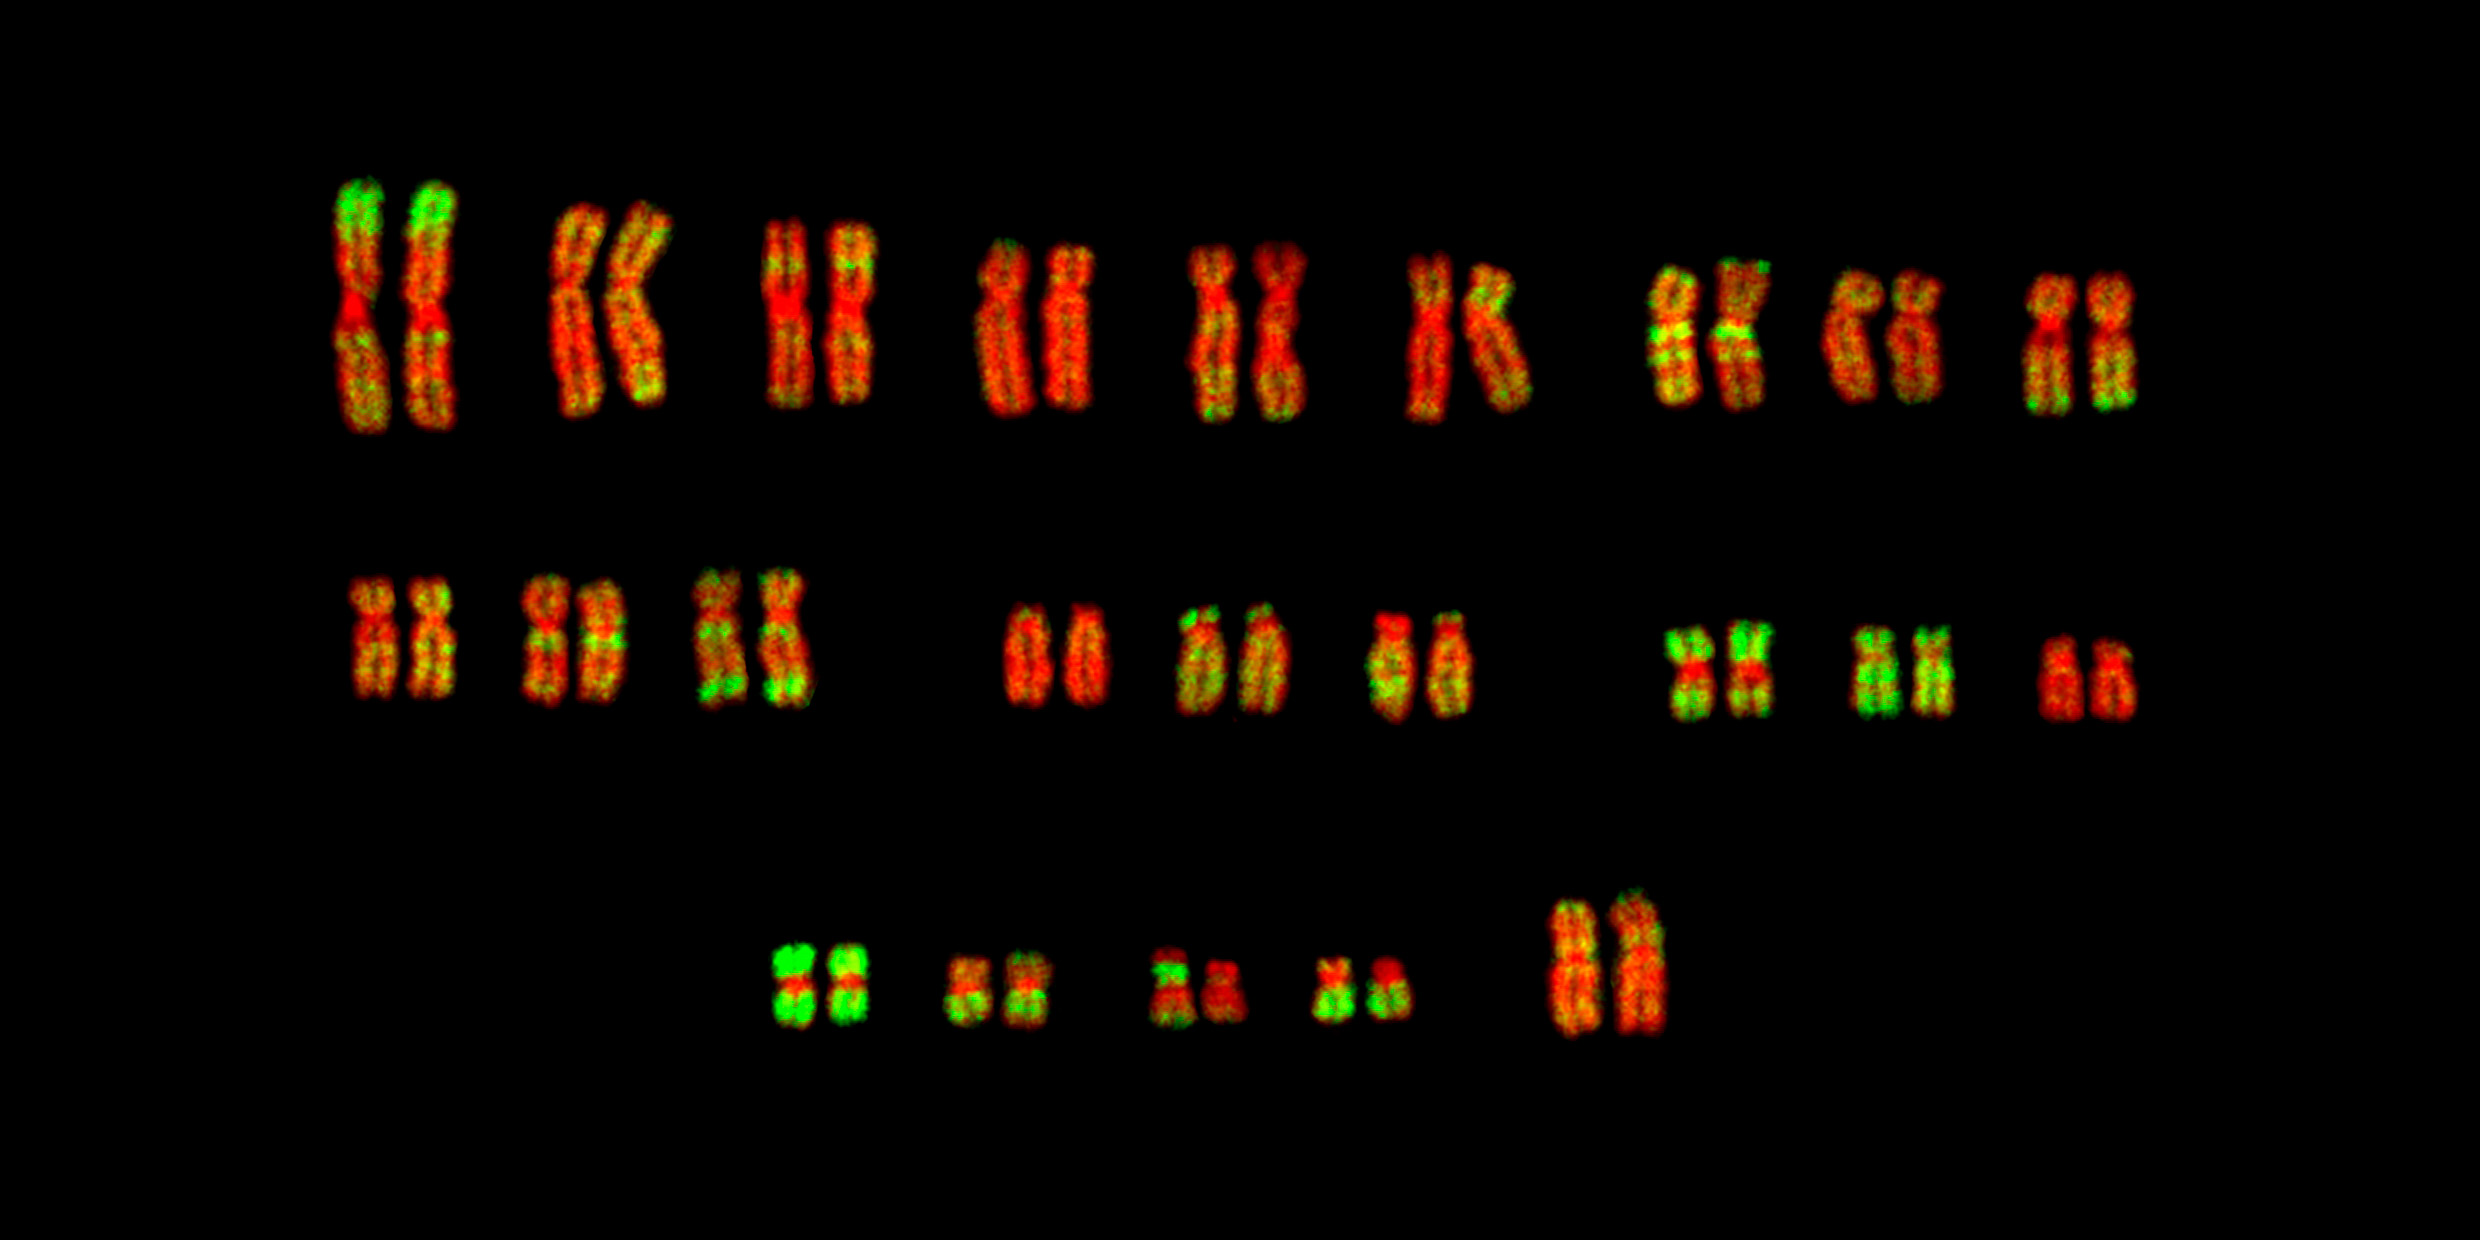 Illustration of human chromosomes arranged into rows